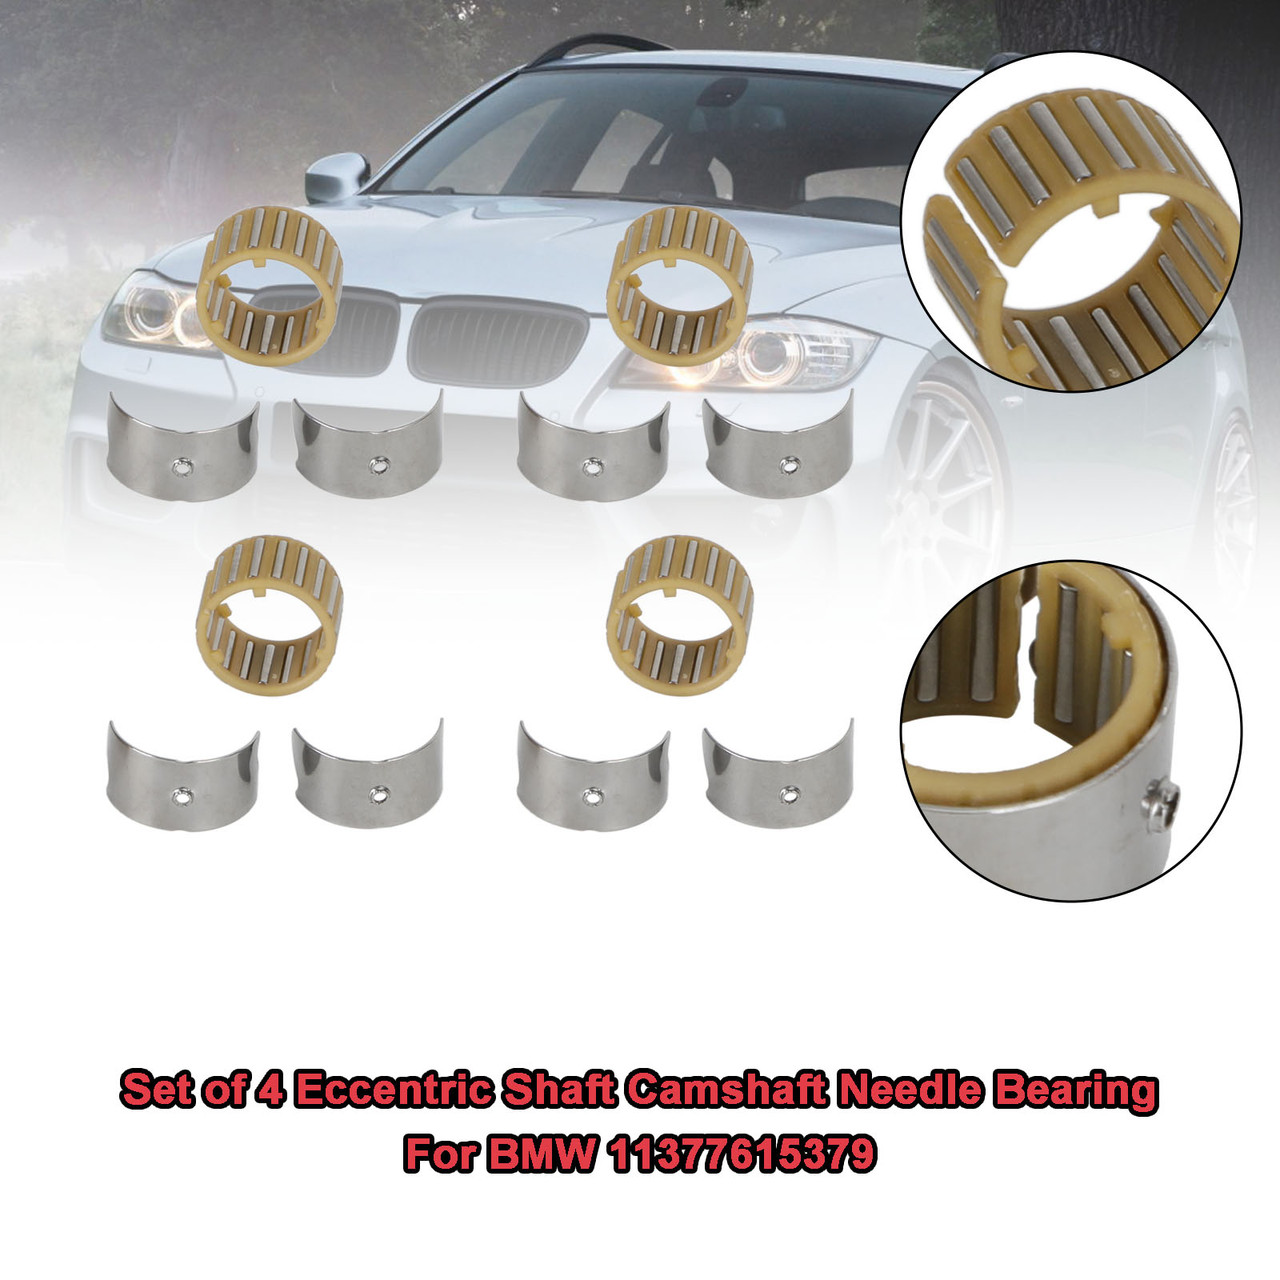 Set of 4 Eccentric Shaft Camshaft Needle Bearing BMW 11377615379